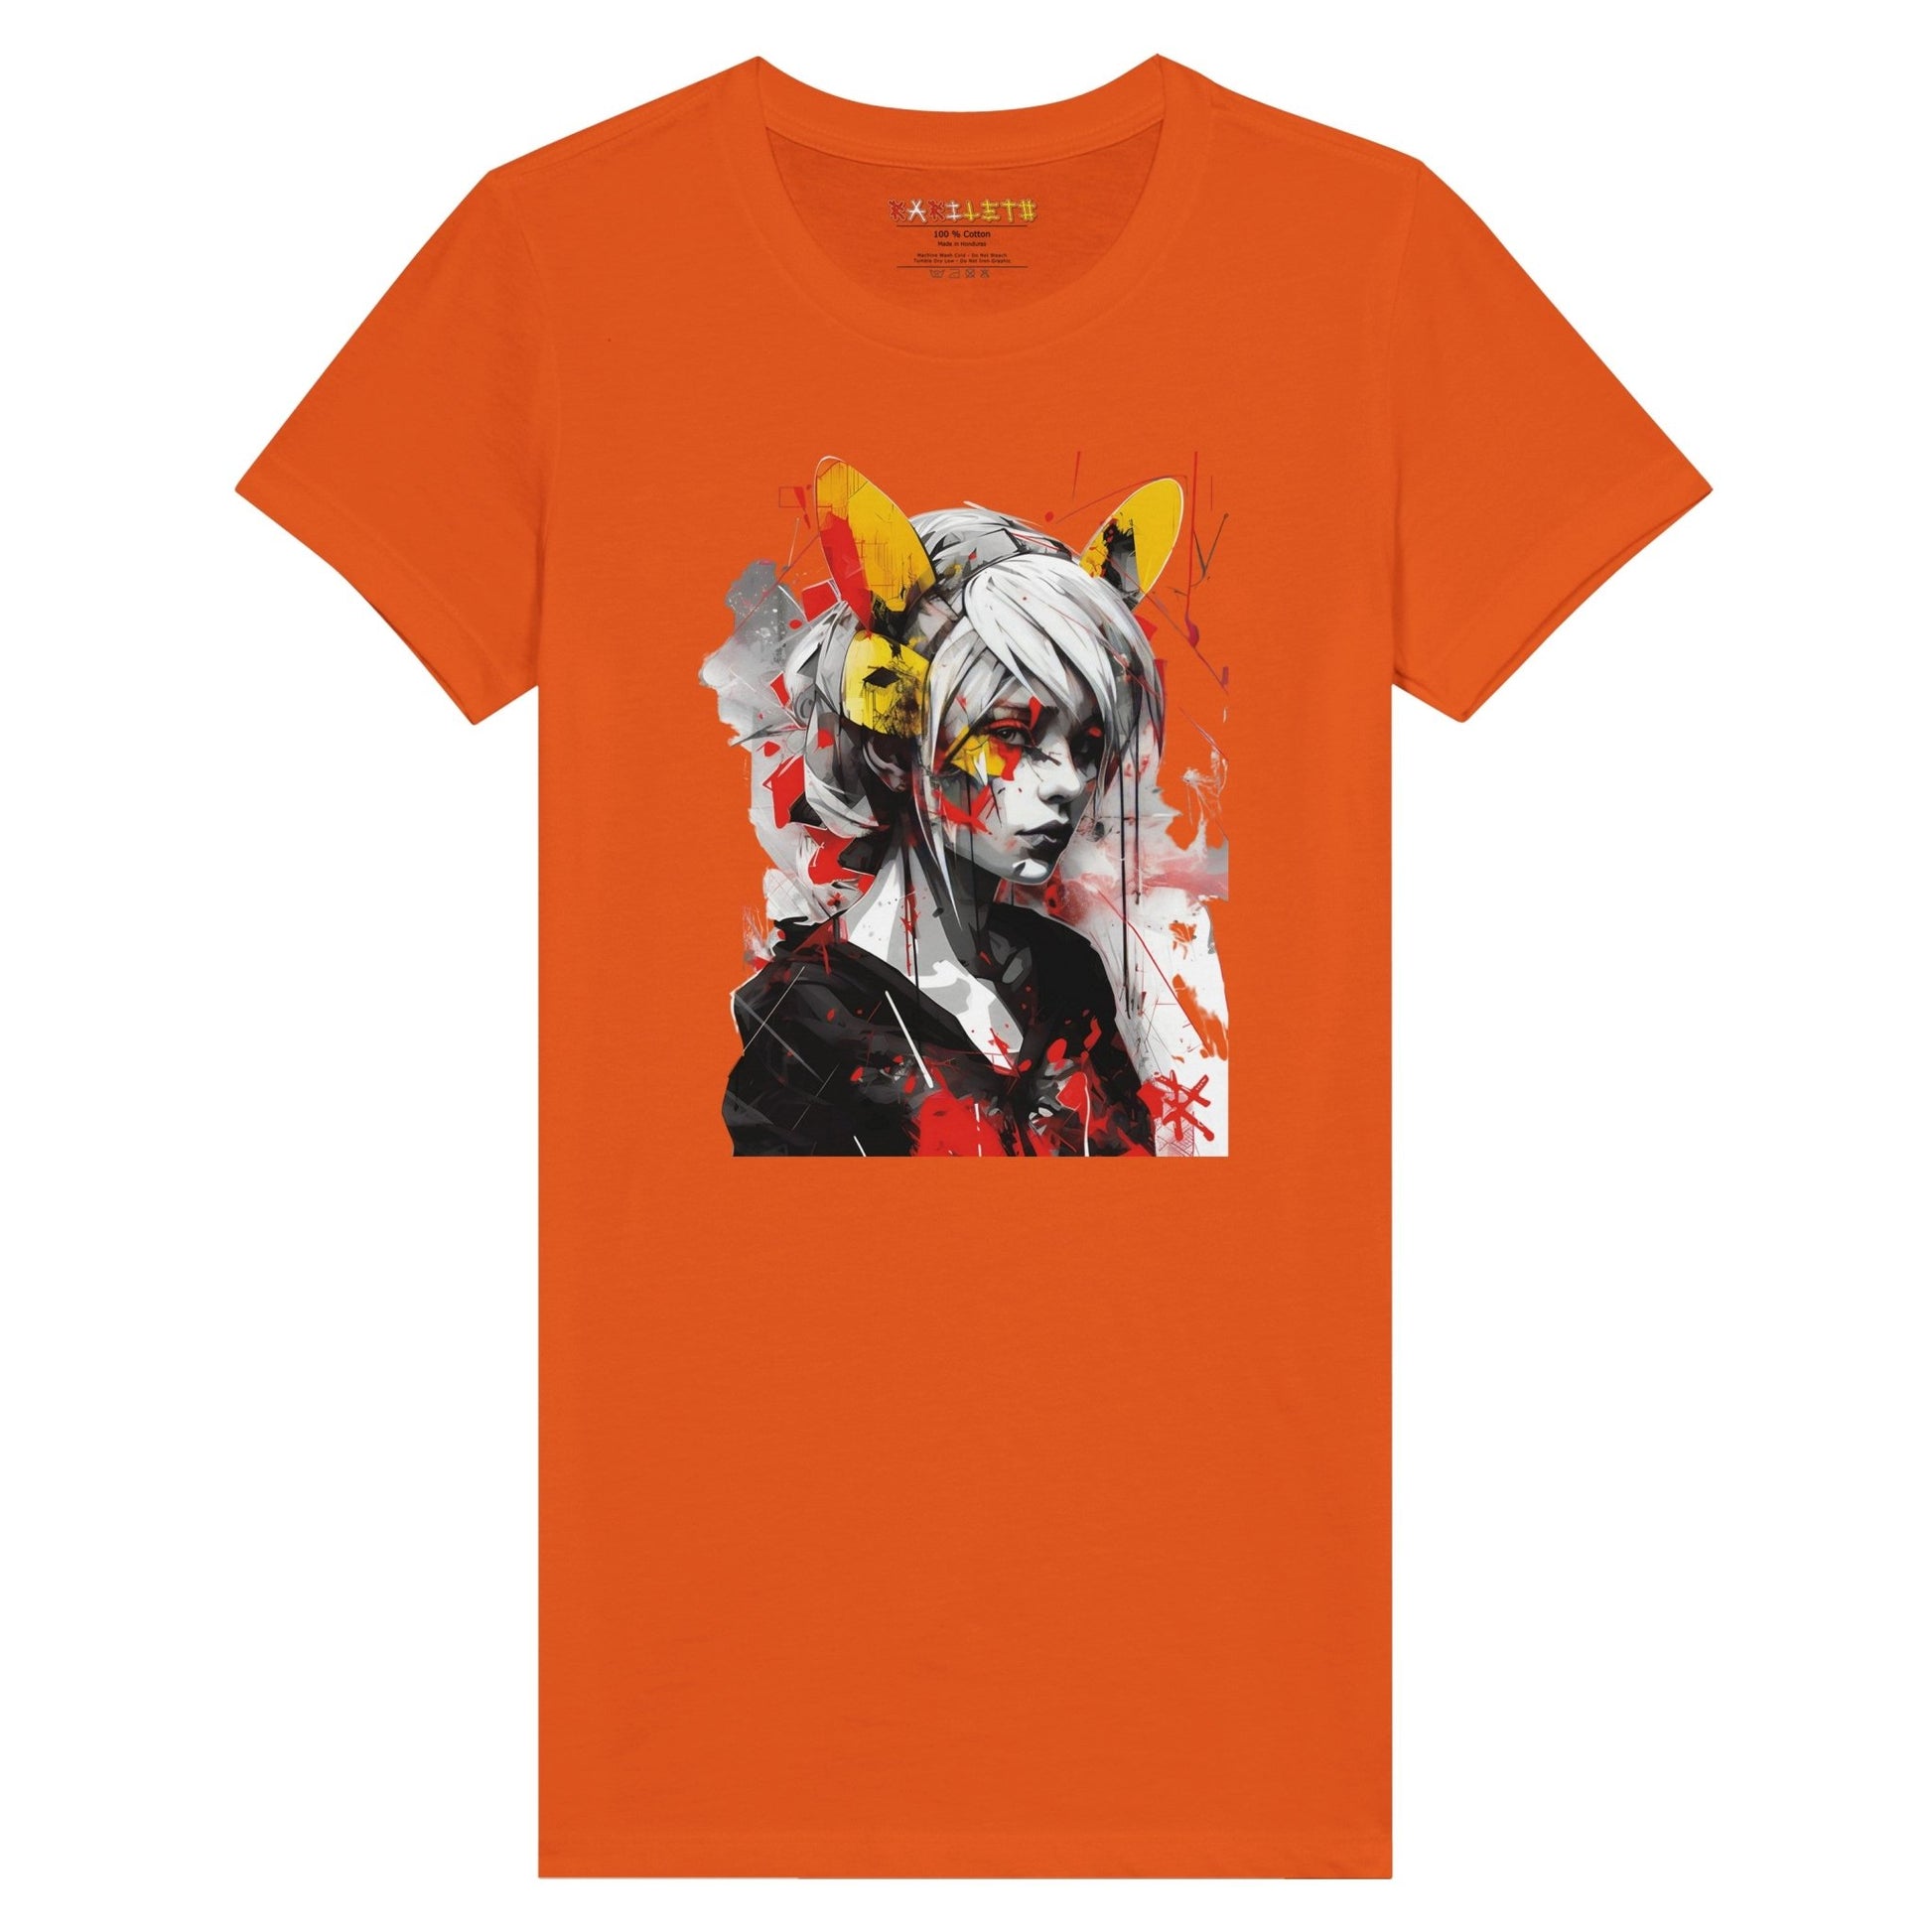 GIRL WITH CAT EARS Premium Tee - Rarileto t shirts - Orange - S